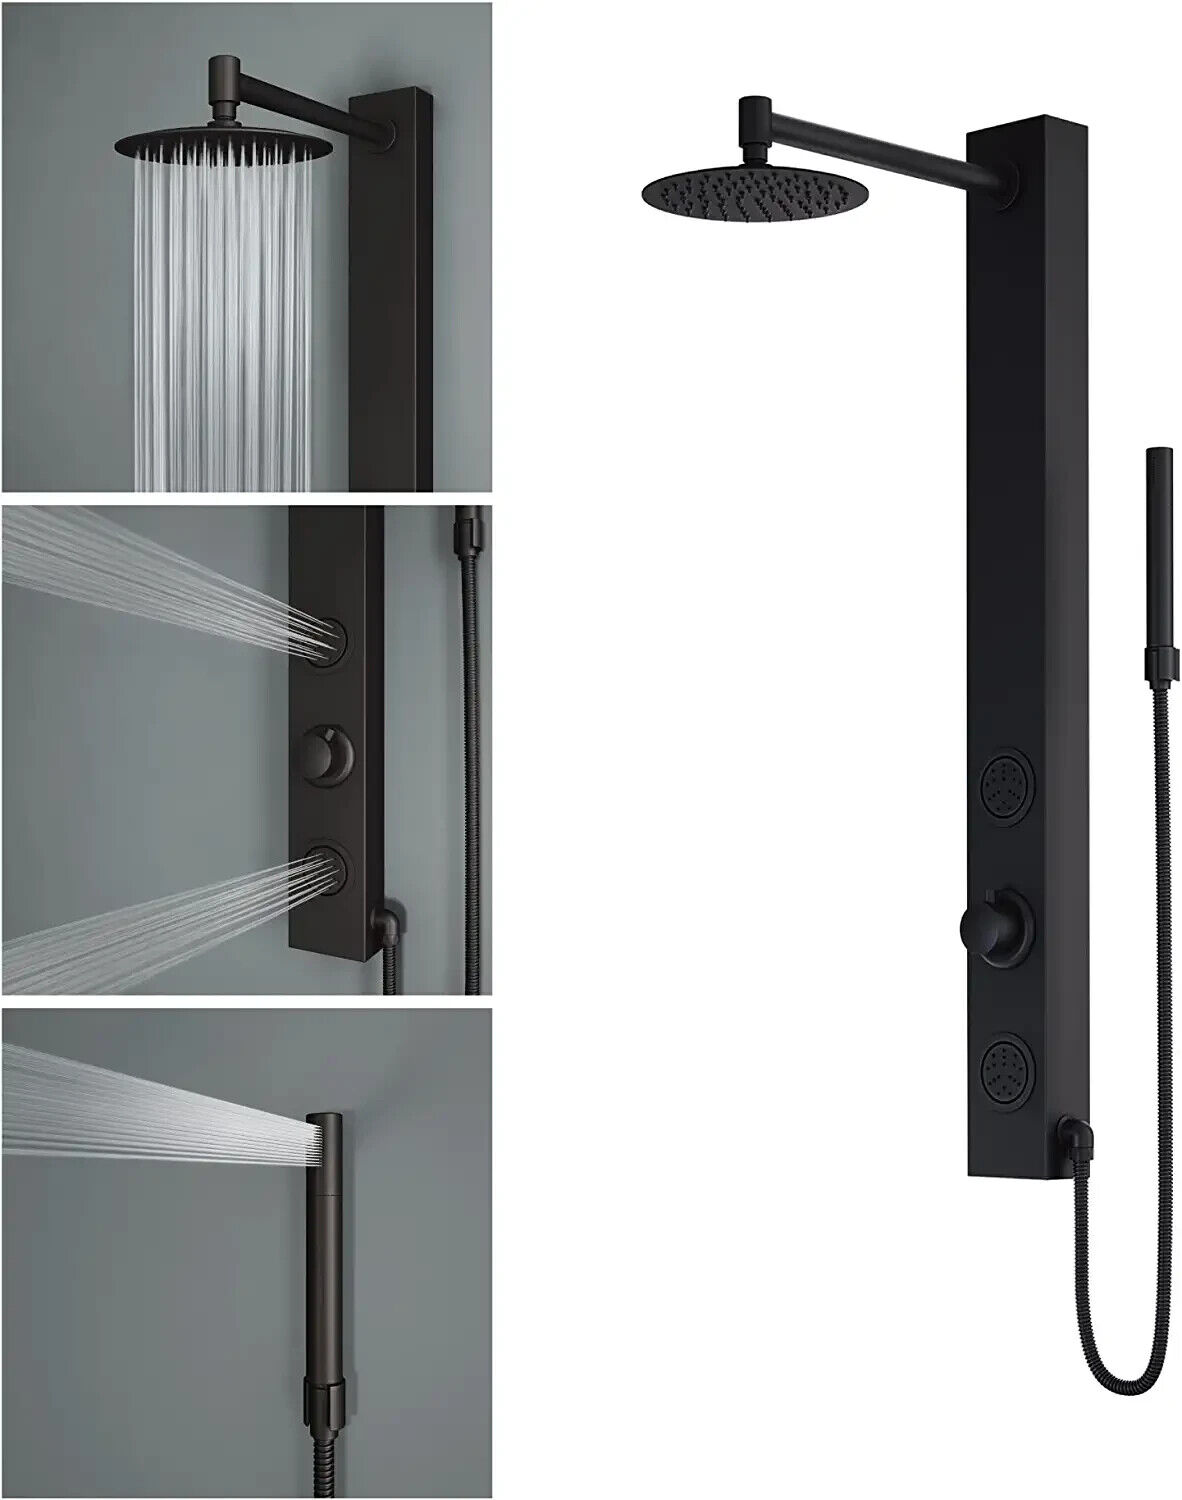 Vigo Vg08016mb Gardenia Retrofit Shower Panel With Shower Head - Matte Black